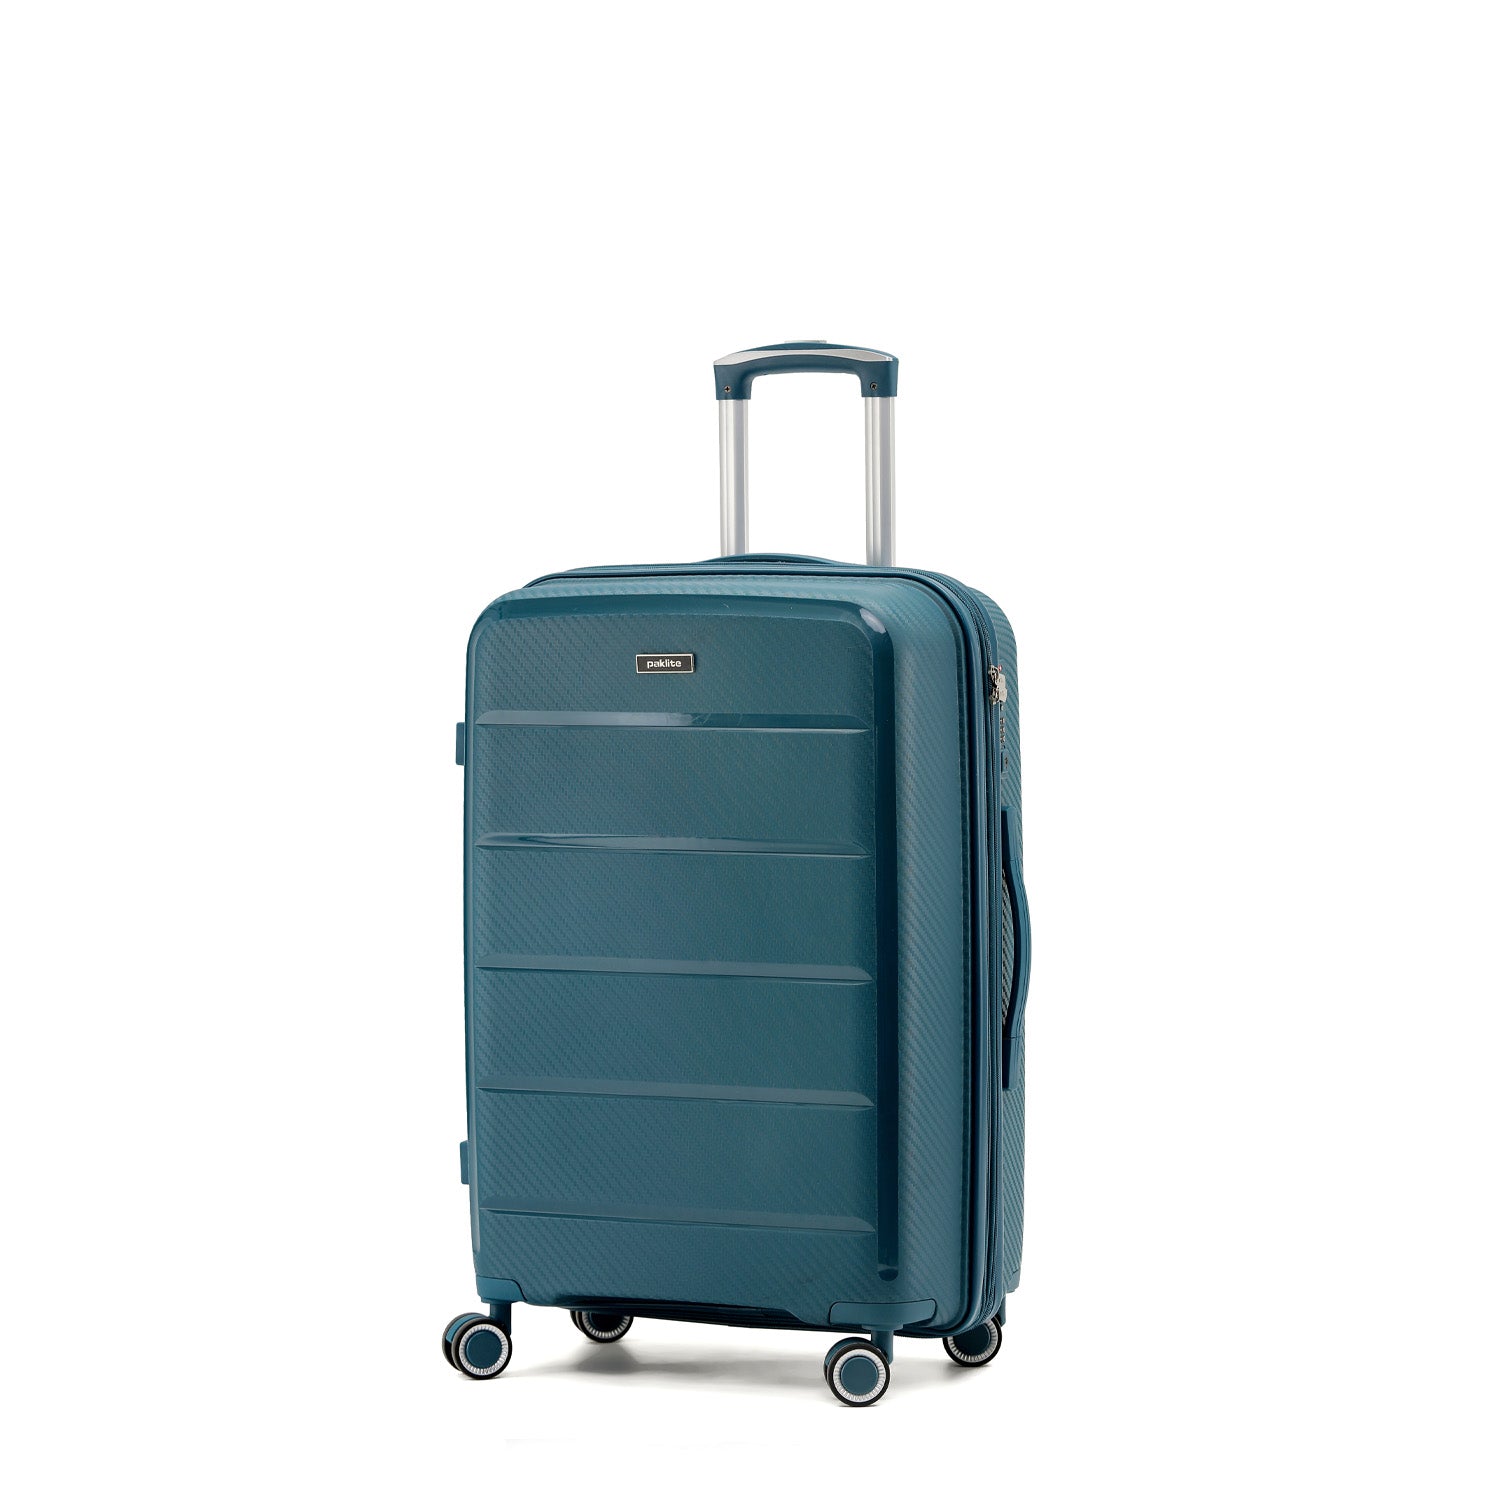 Paklite - PA7350 Medium 65cm spinner suitcase - Blue-5